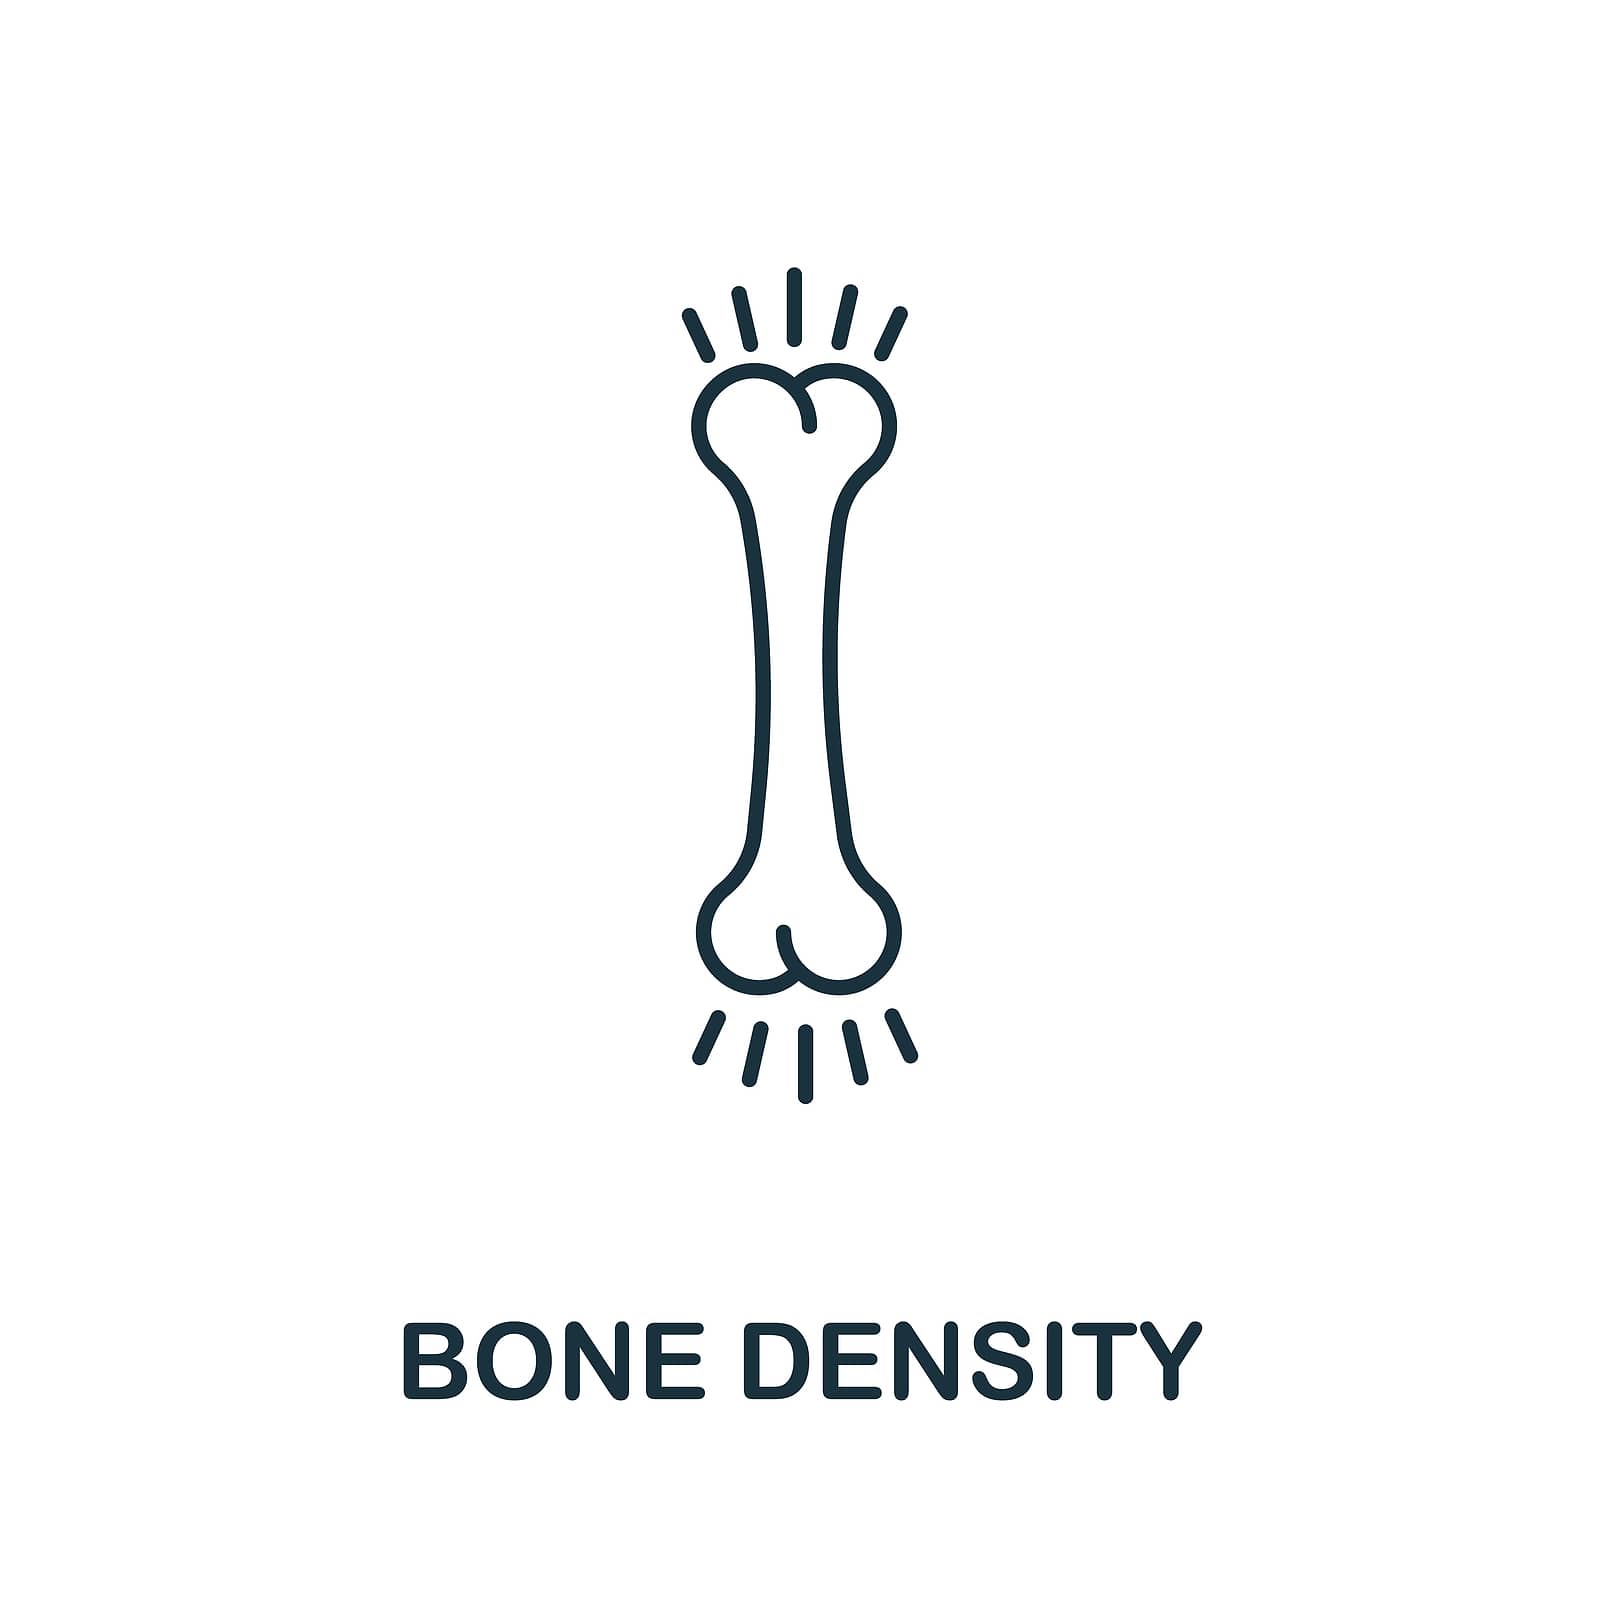 Medicare Coverage for Bone Density Testing